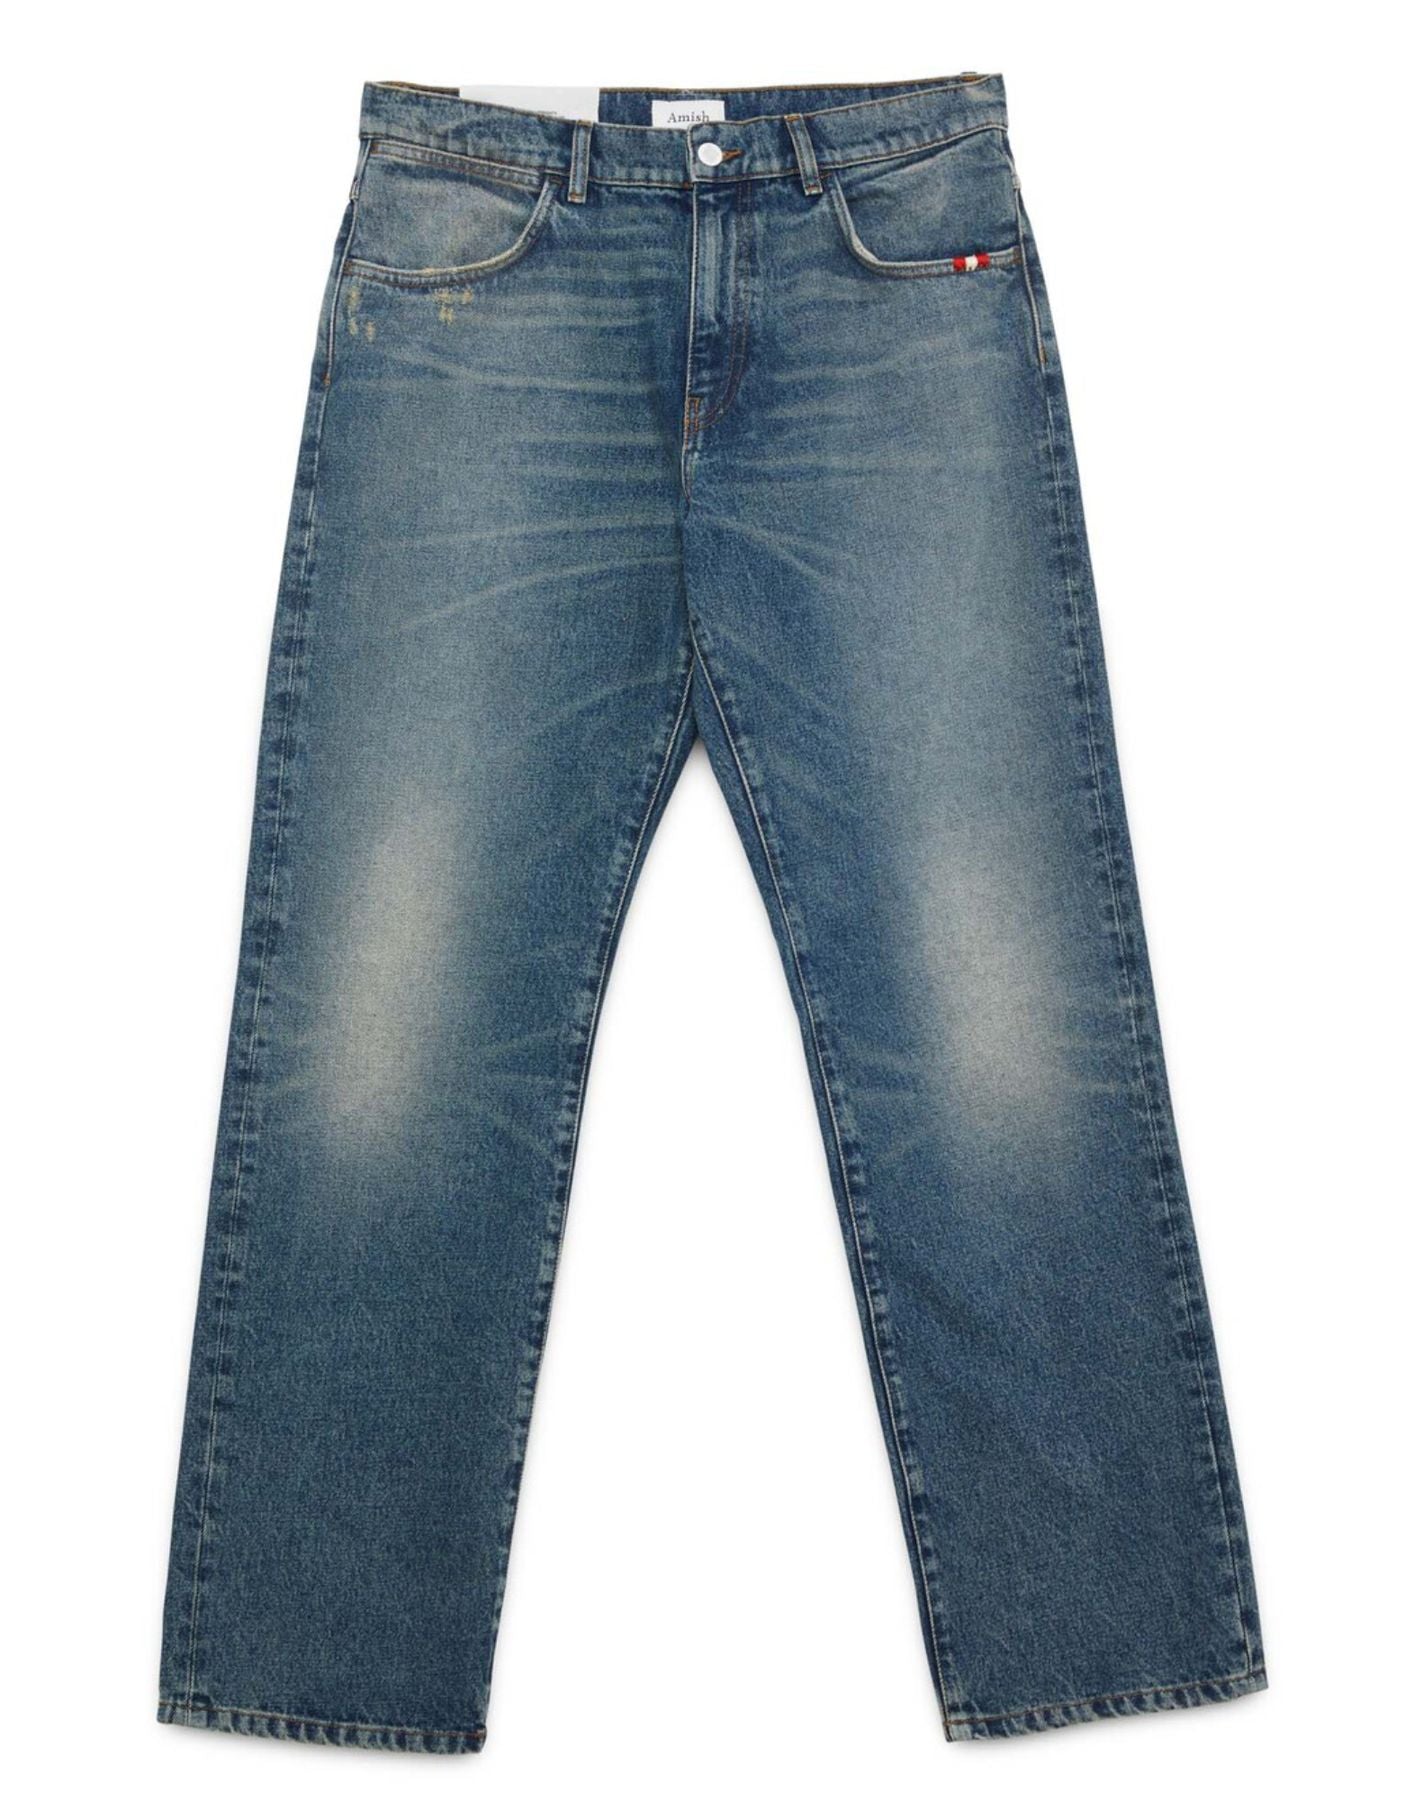 Jeans man AMU010D4352755 C0999 Amish